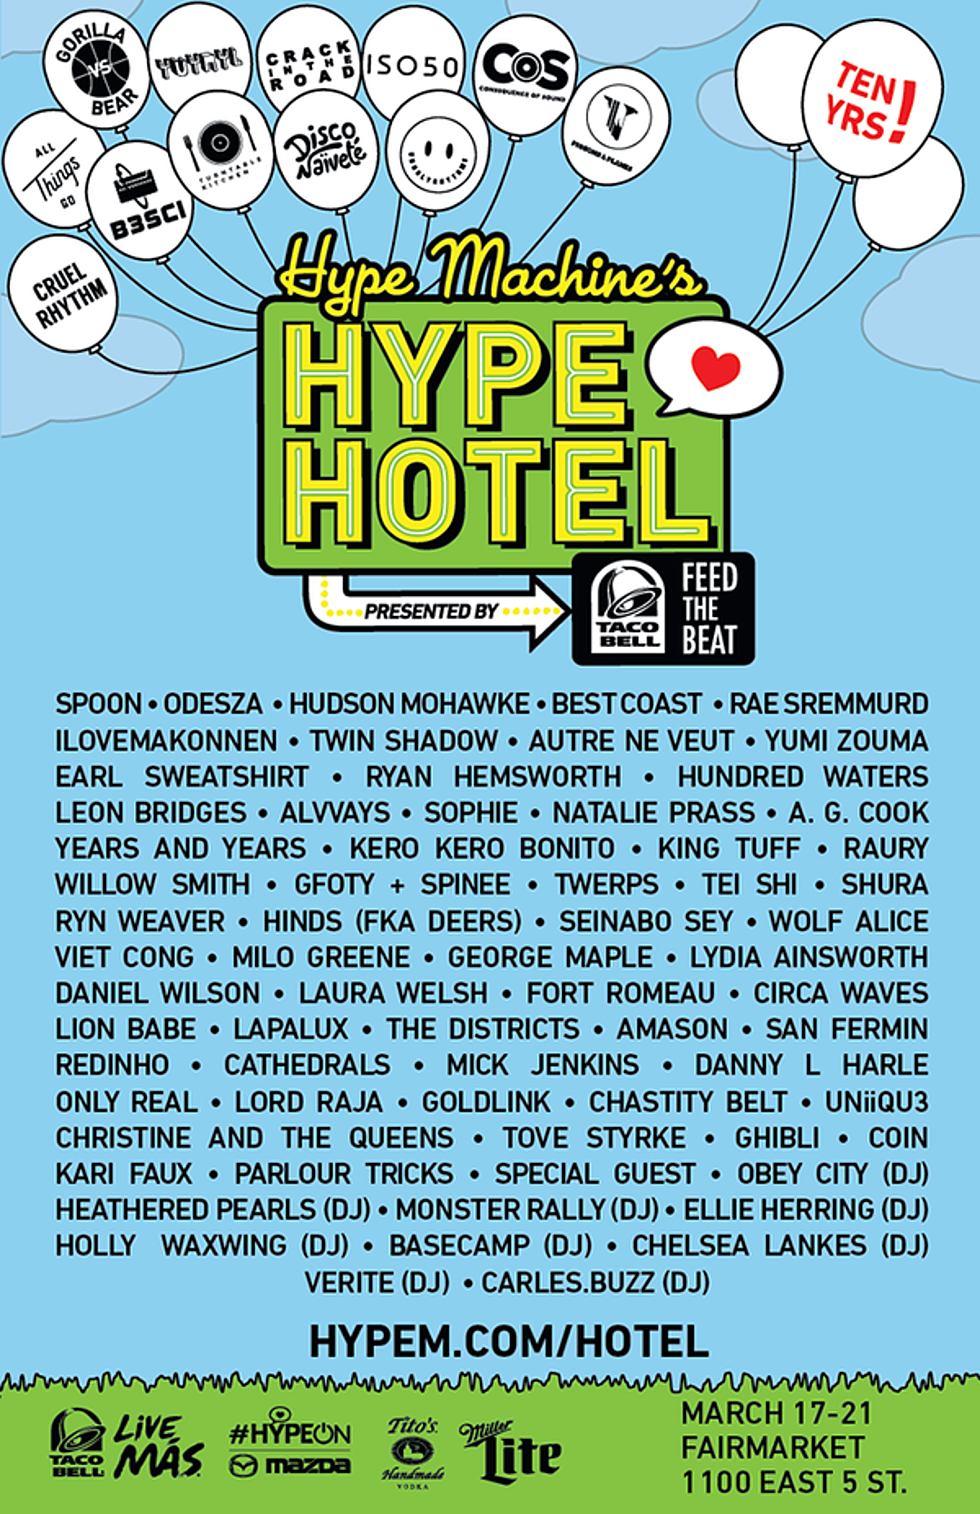 iLoveMakonnen, Rae Sremmurd, Earl Sweatshirt and More Will Perform at Hype Hotel in SXSW